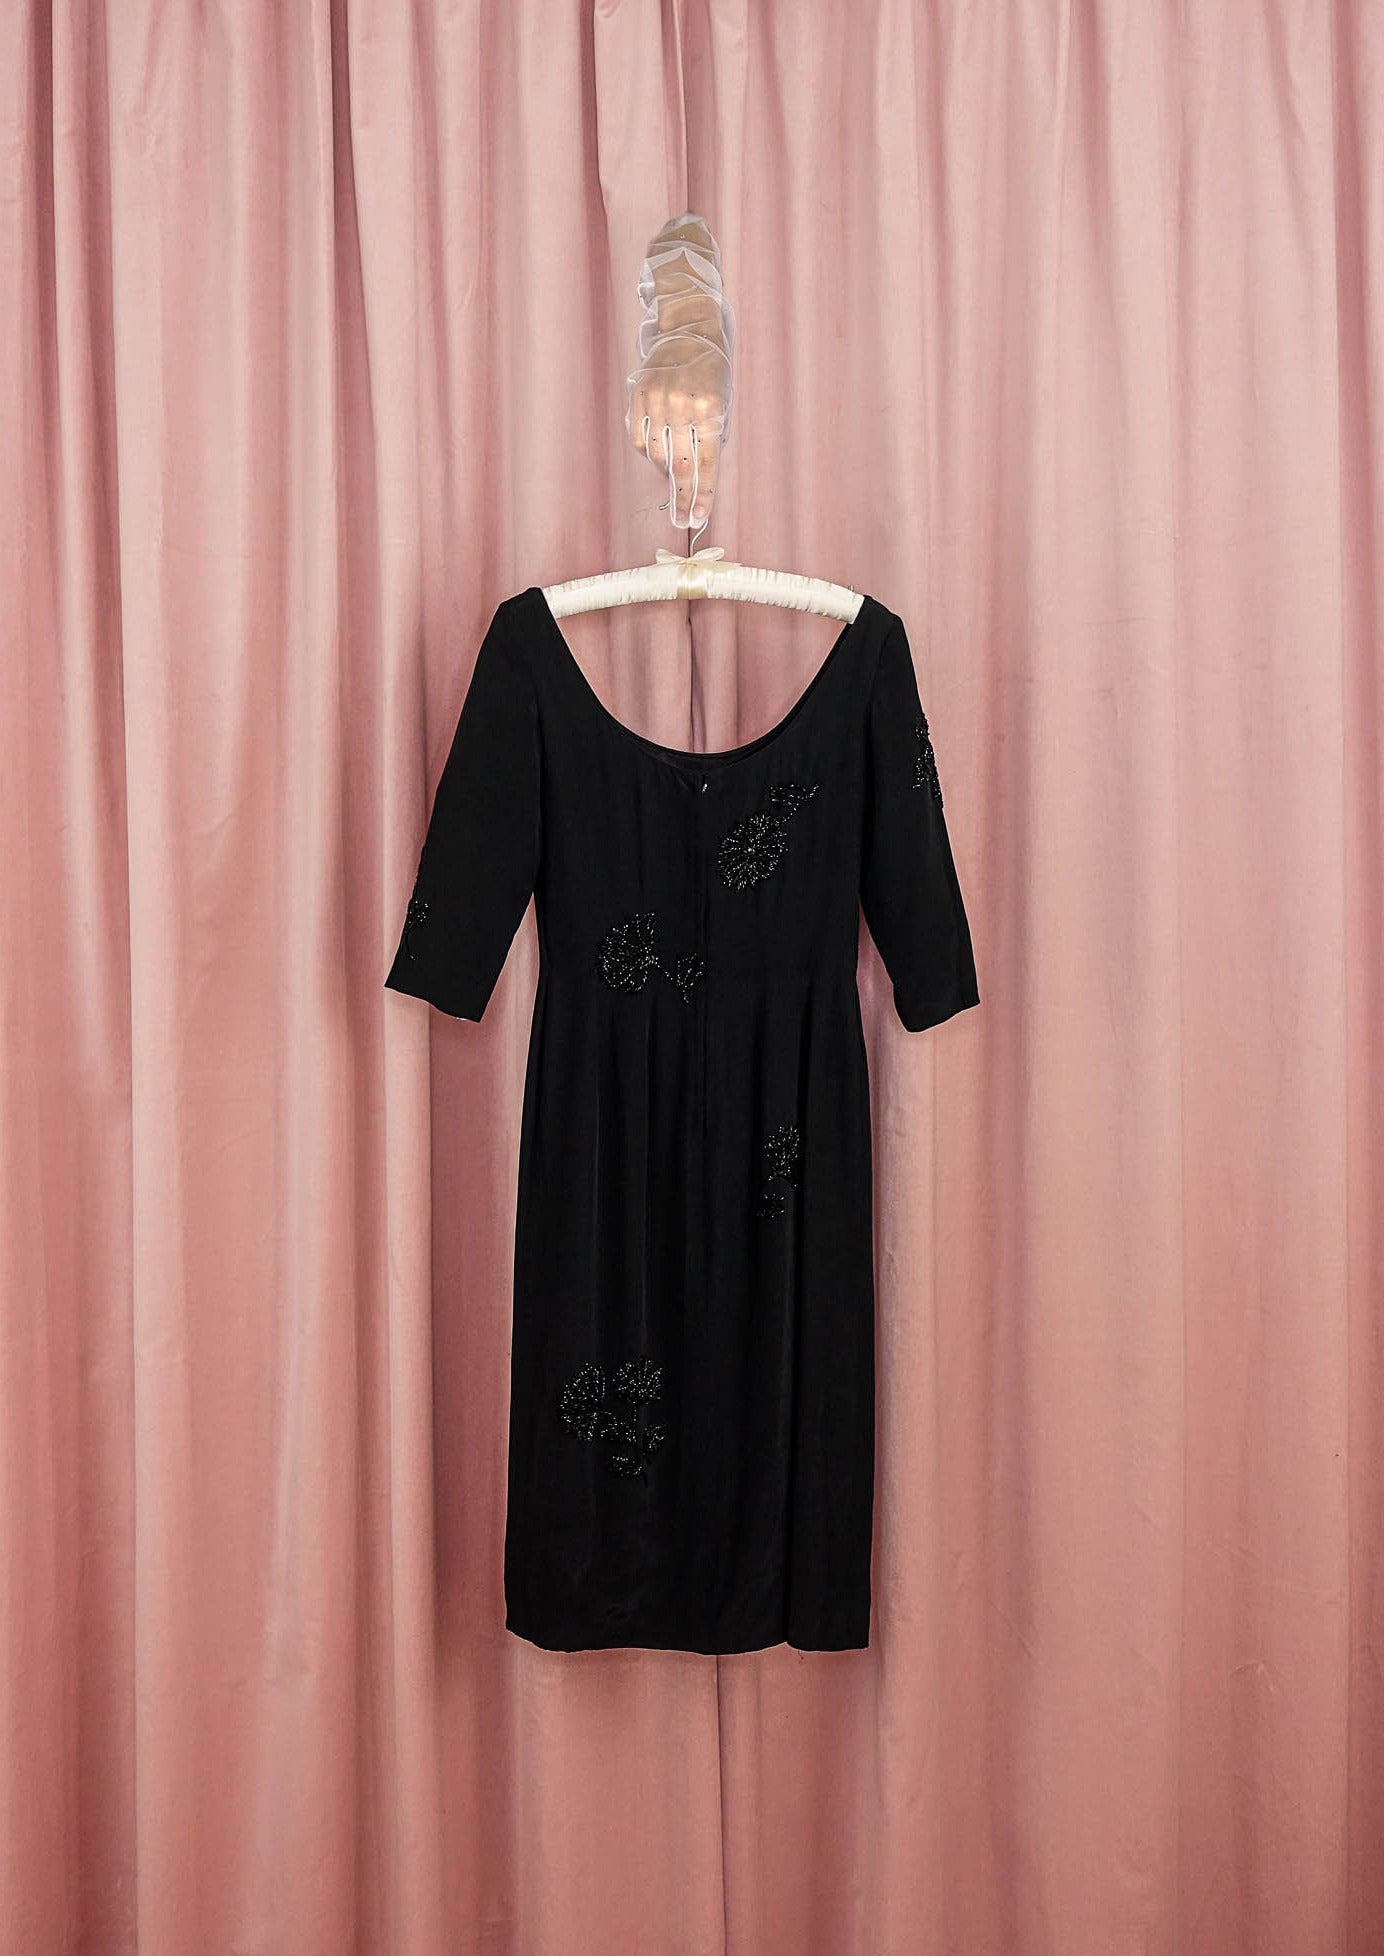 1960s 'Gene Shelly' Beaded Black Wiggle Dress